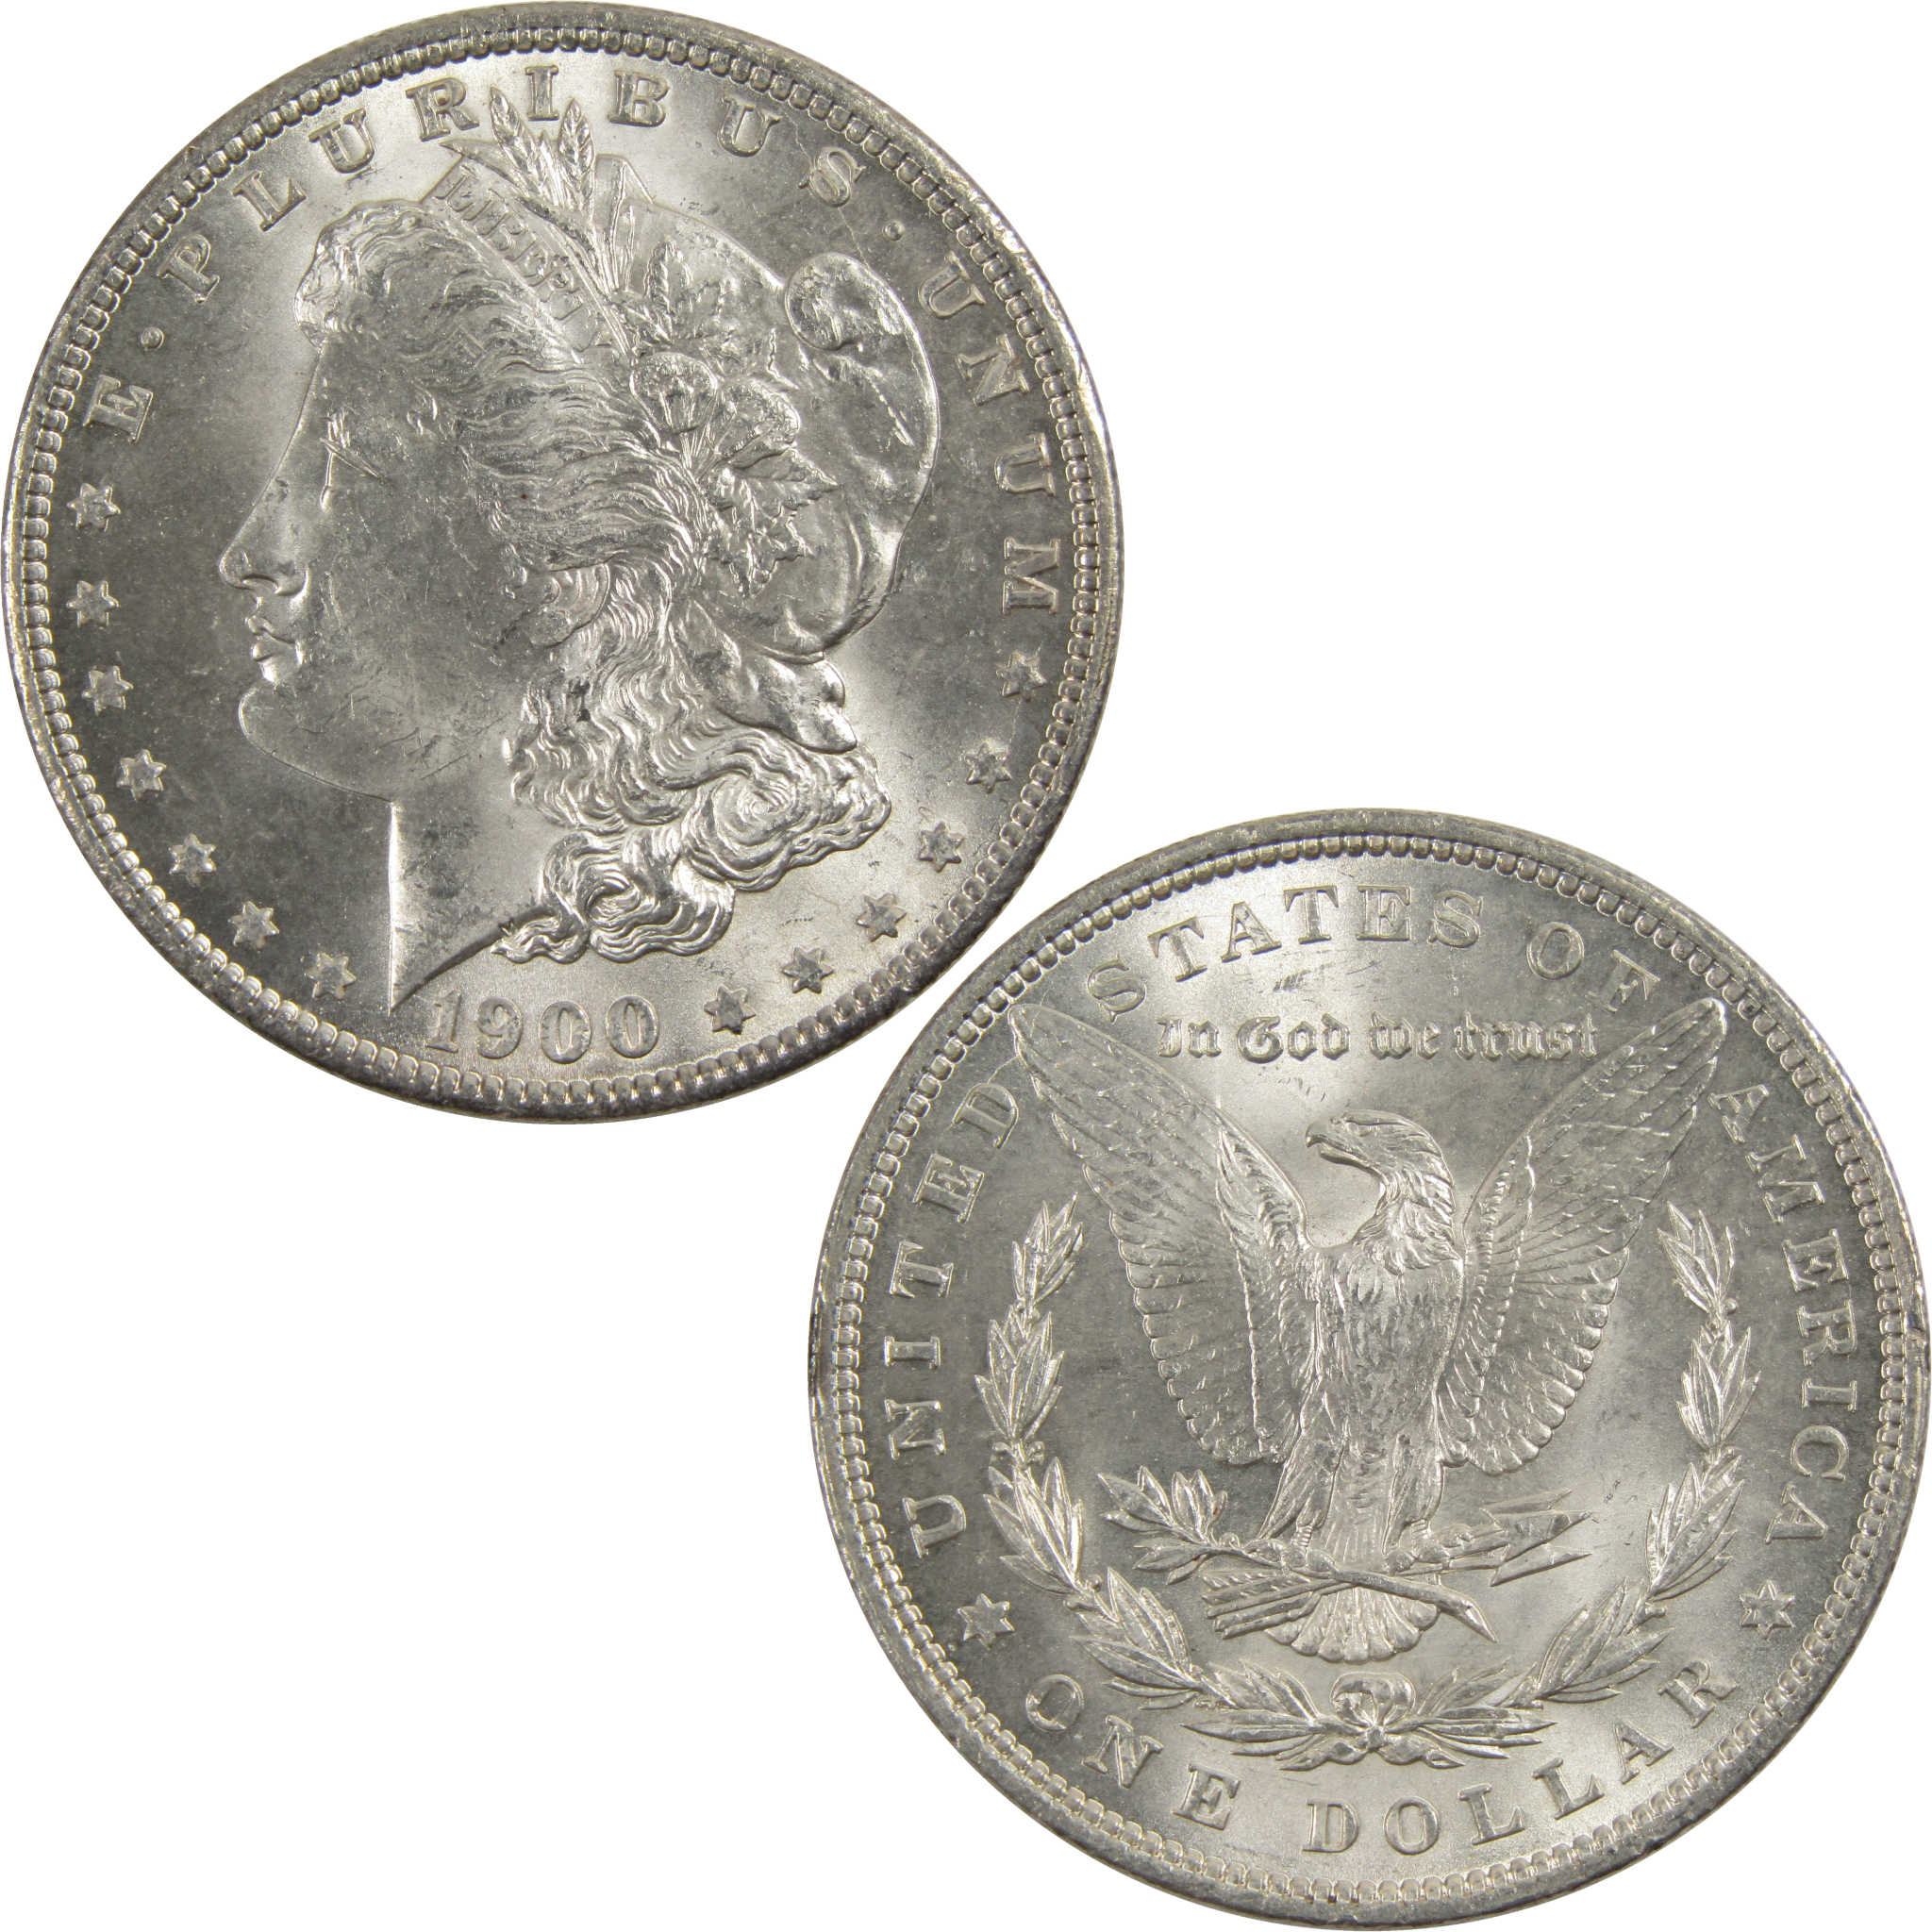 1900 Morgan Dollar BU Choice Uncirculated 90% Silver $1 Coin SKU:I8118 - Morgan coin - Morgan silver dollar - Morgan silver dollar for sale - Profile Coins &amp; Collectibles